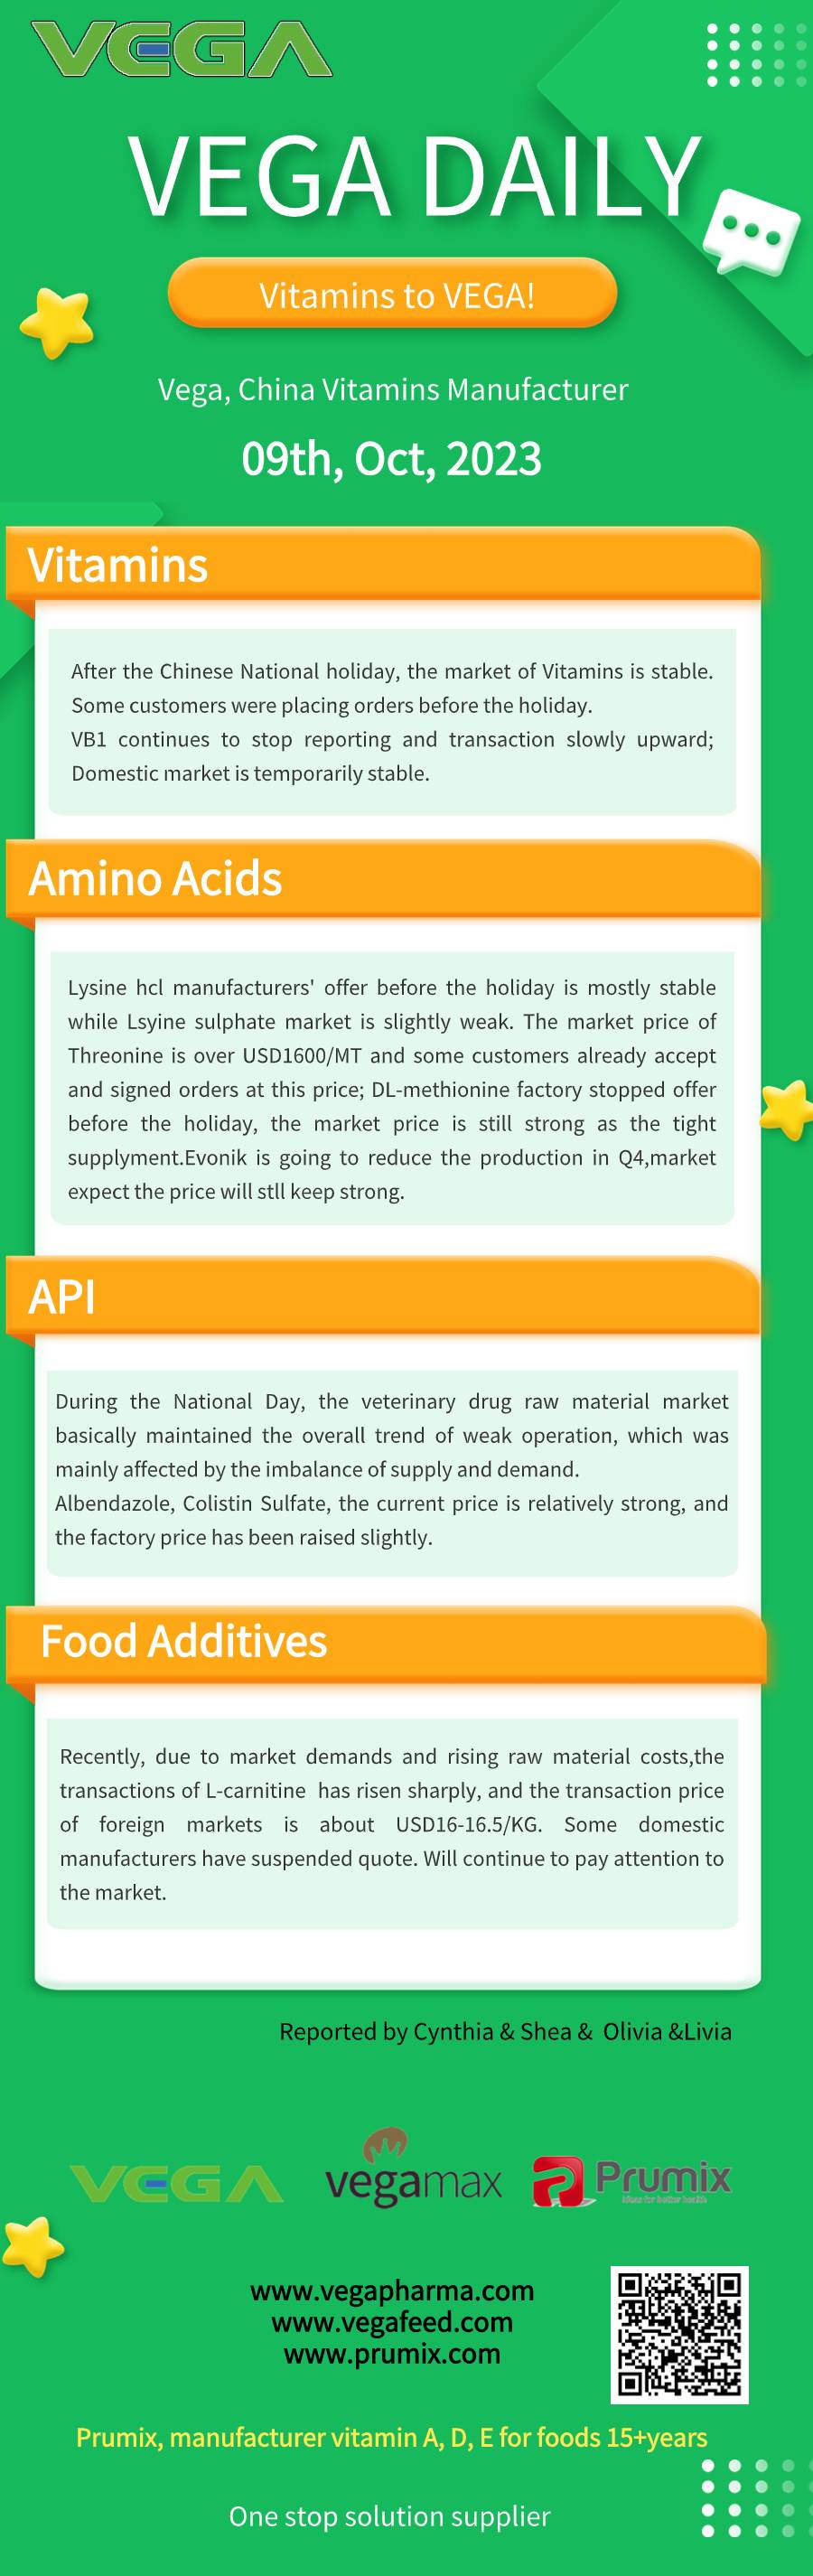 Vega Daily Dated on Oct 9th 2023 Vitamin  Amino Acid API Food Additives.jpg